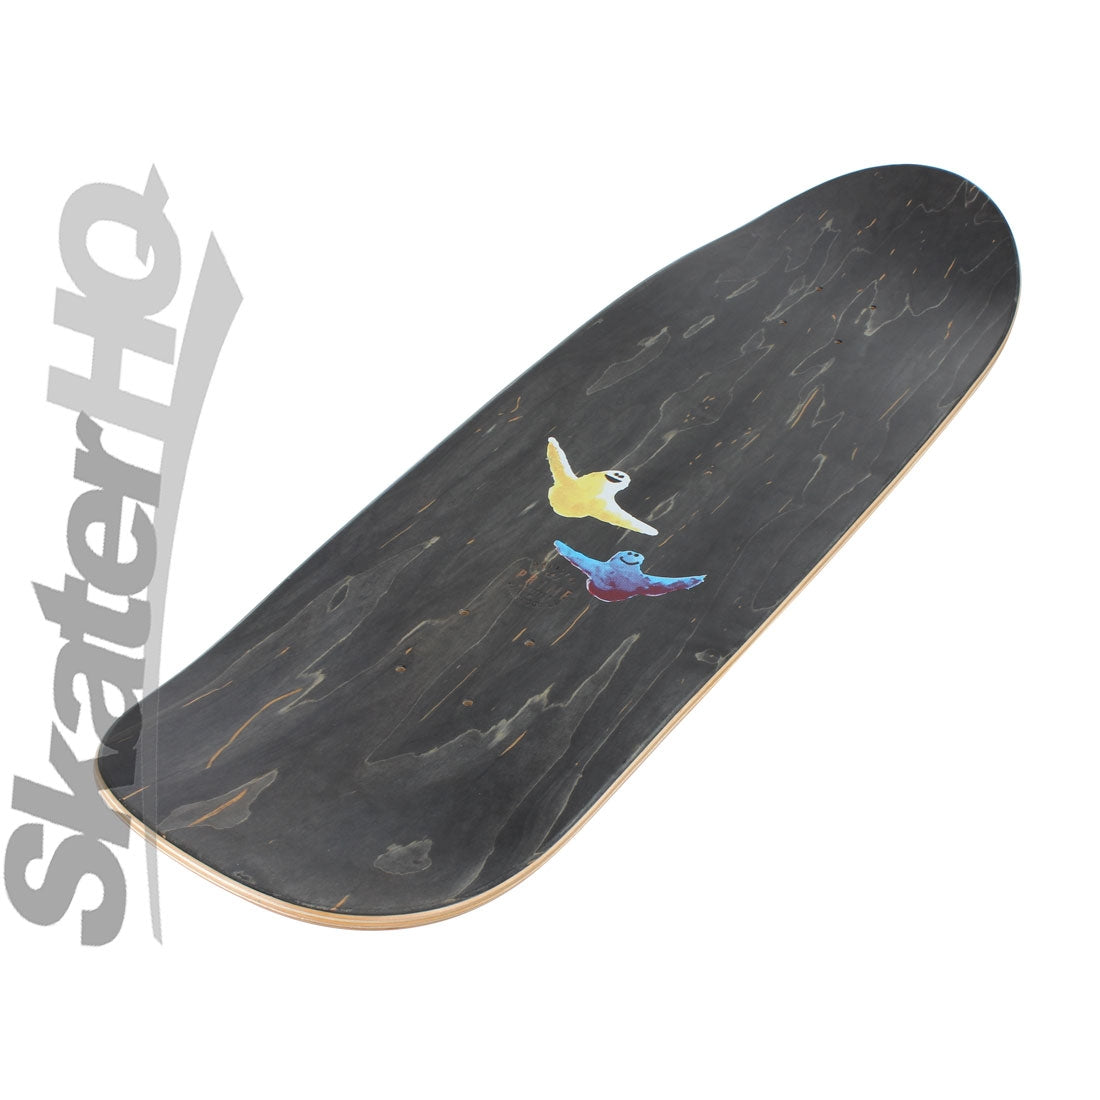 Prime Gonz Bowie 9.5 Deck - Black Skateboard Decks Old School